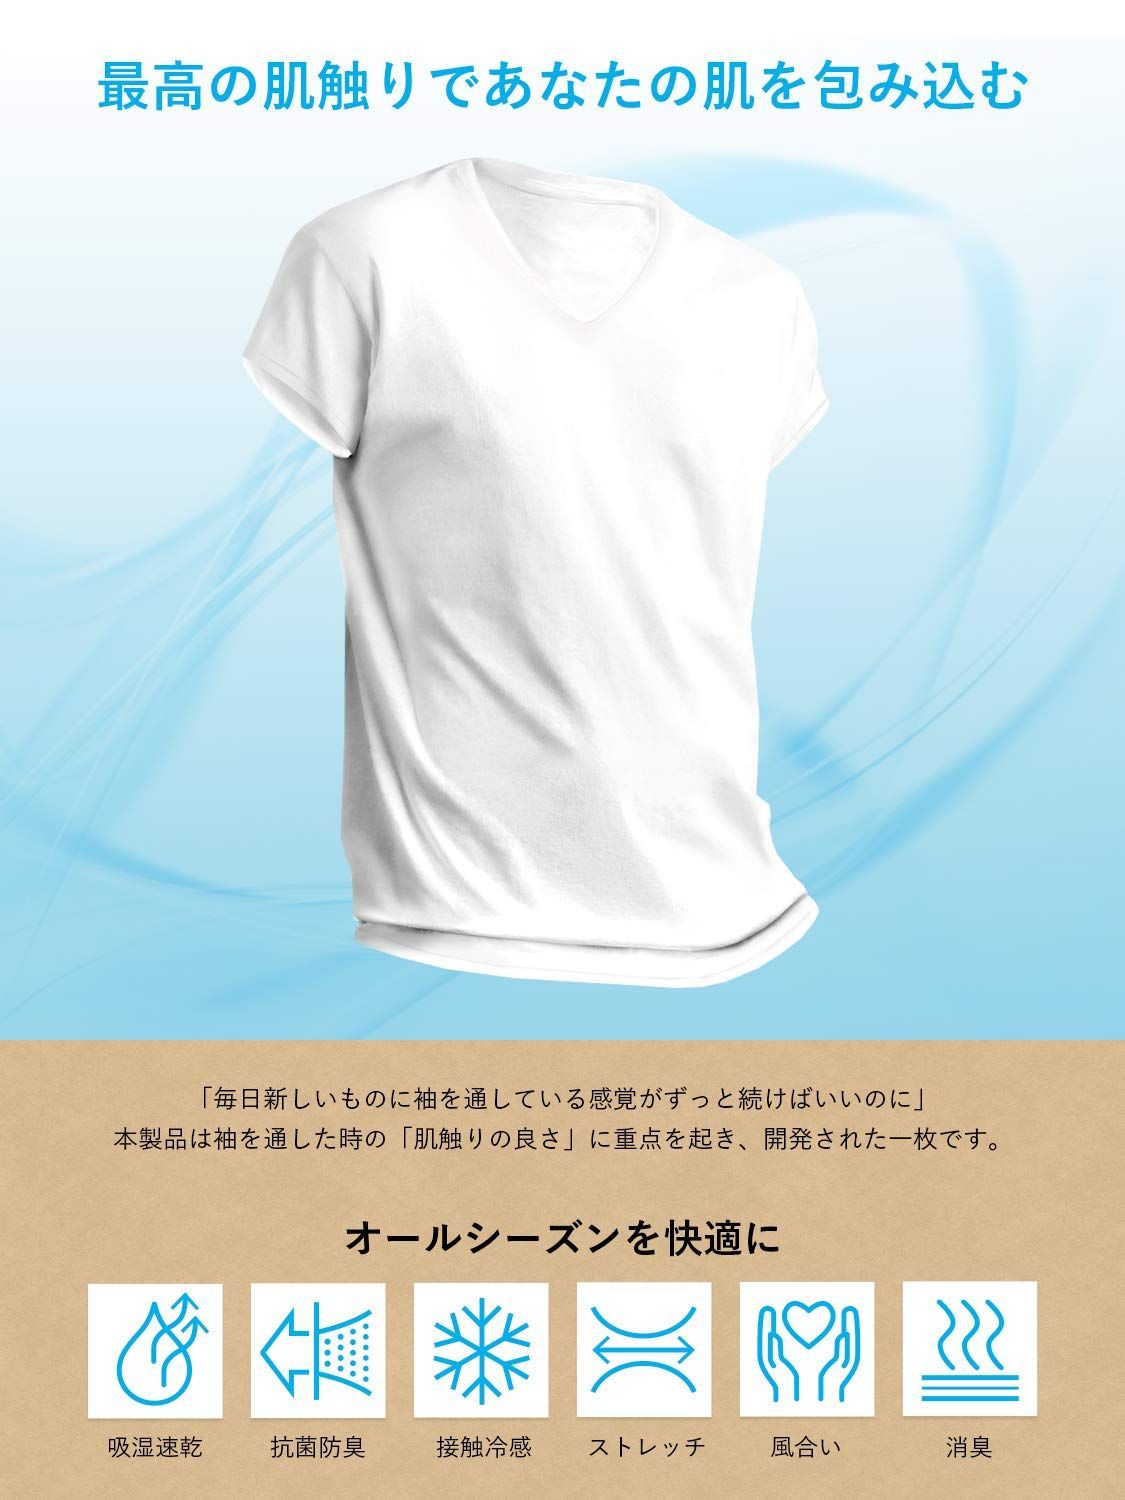 fun. インナーシャツ 3枚セット Vネック メンズ エアクティブシリーズ 夏 吸湿 冷感 速乾 抗菌 最高のさわり心地 帝人 メルカリShops